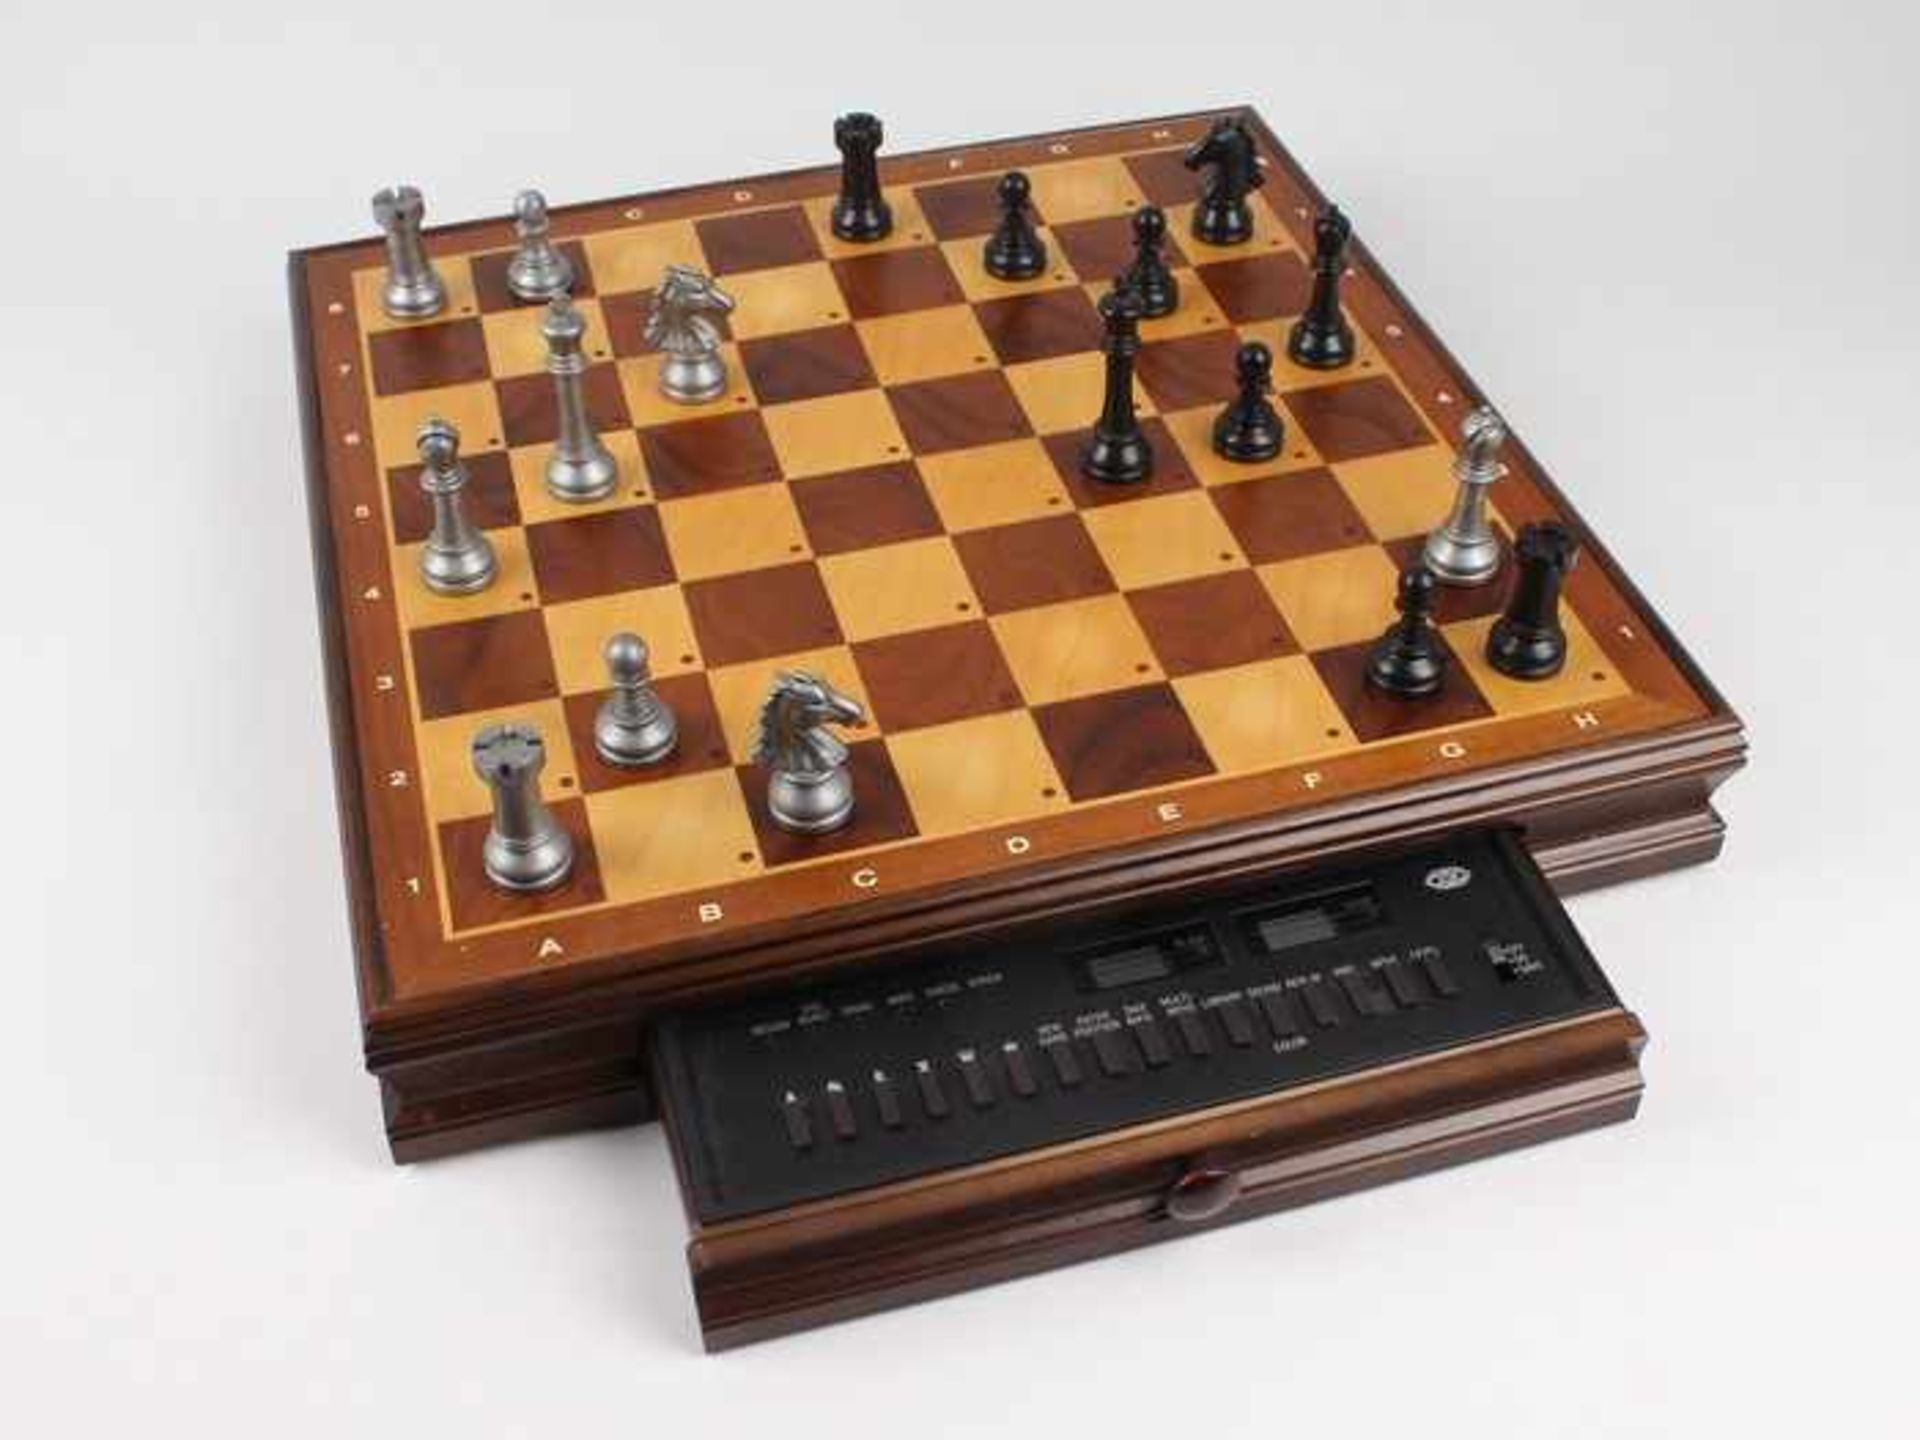 Schachcomputer1980 90er J Chess 3008 Hersteller Cxg Kam 1987 Auf Den Markt Magnetsensorbrett